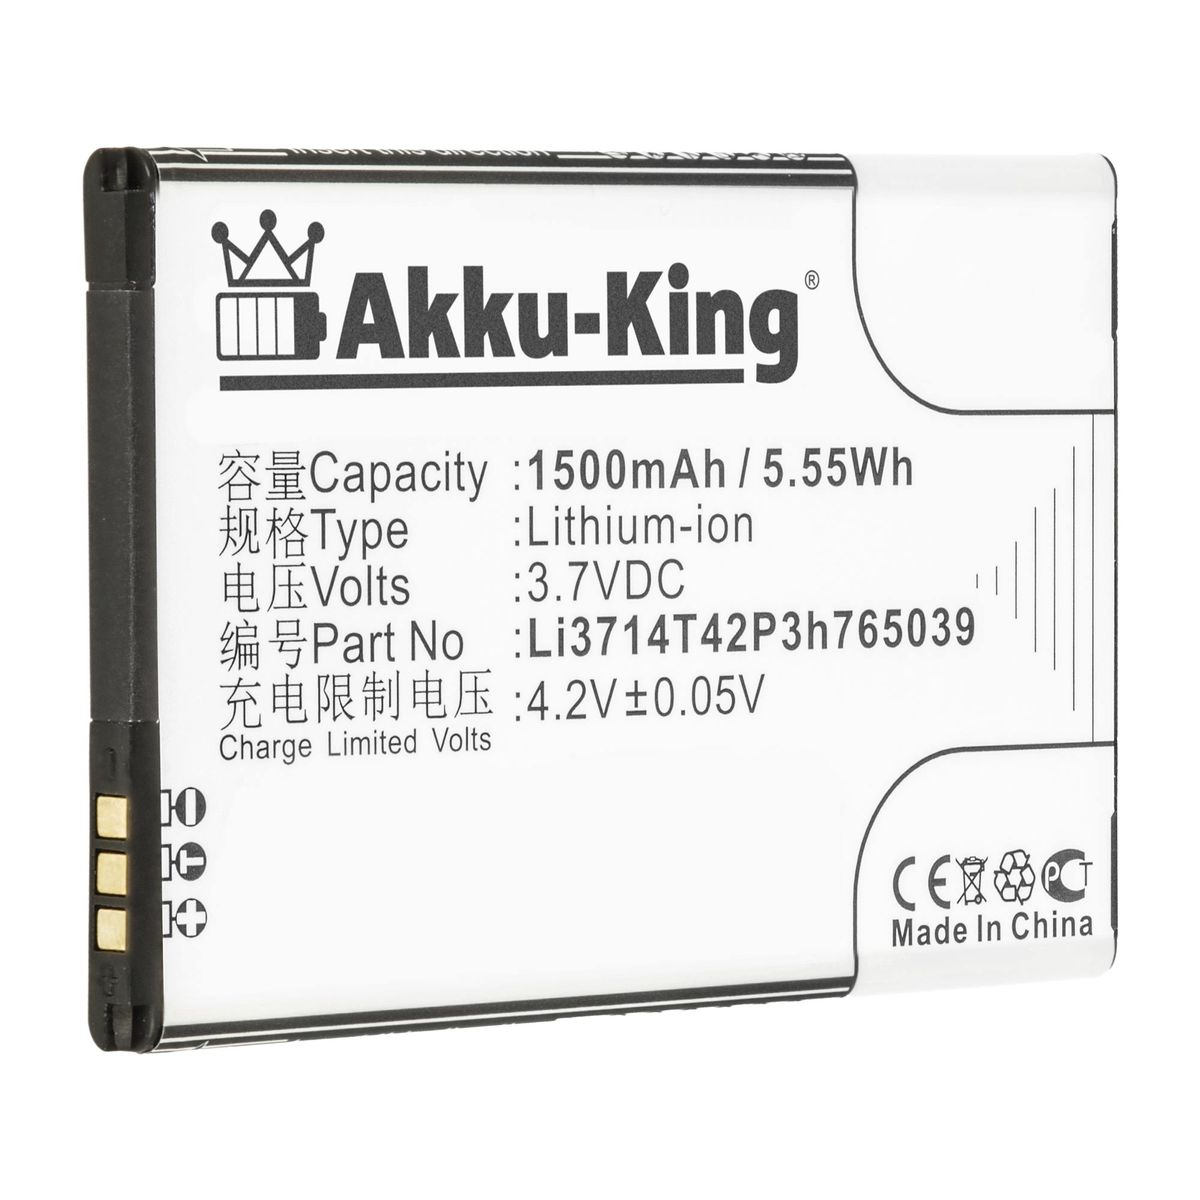 AKKU-KING Akku kompatibel mit ZTE Li-Ion Volt, Li3714T42P3h765039 3.7 1500mAh Handy-Akku